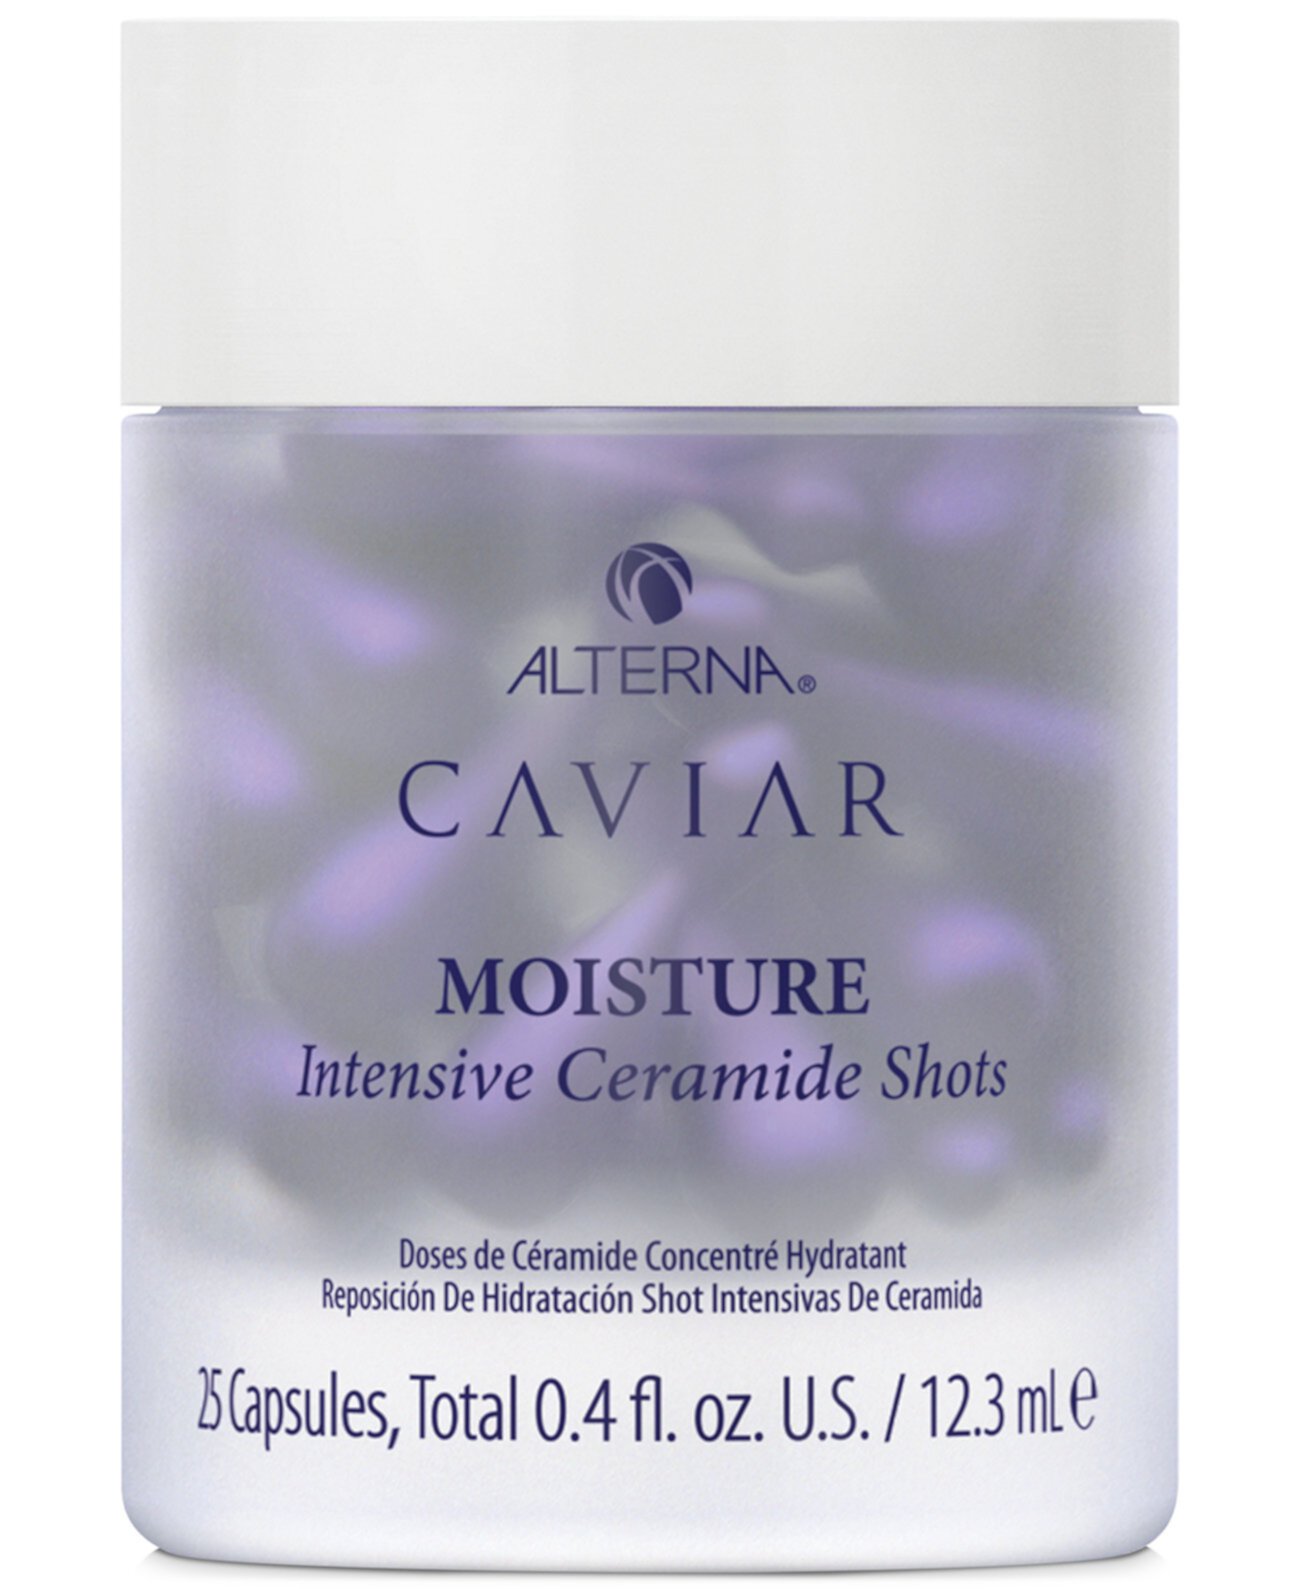 Caviar Moisture Intensive Ceramide Shots (Интенсивные церамидные шоты) Alterna